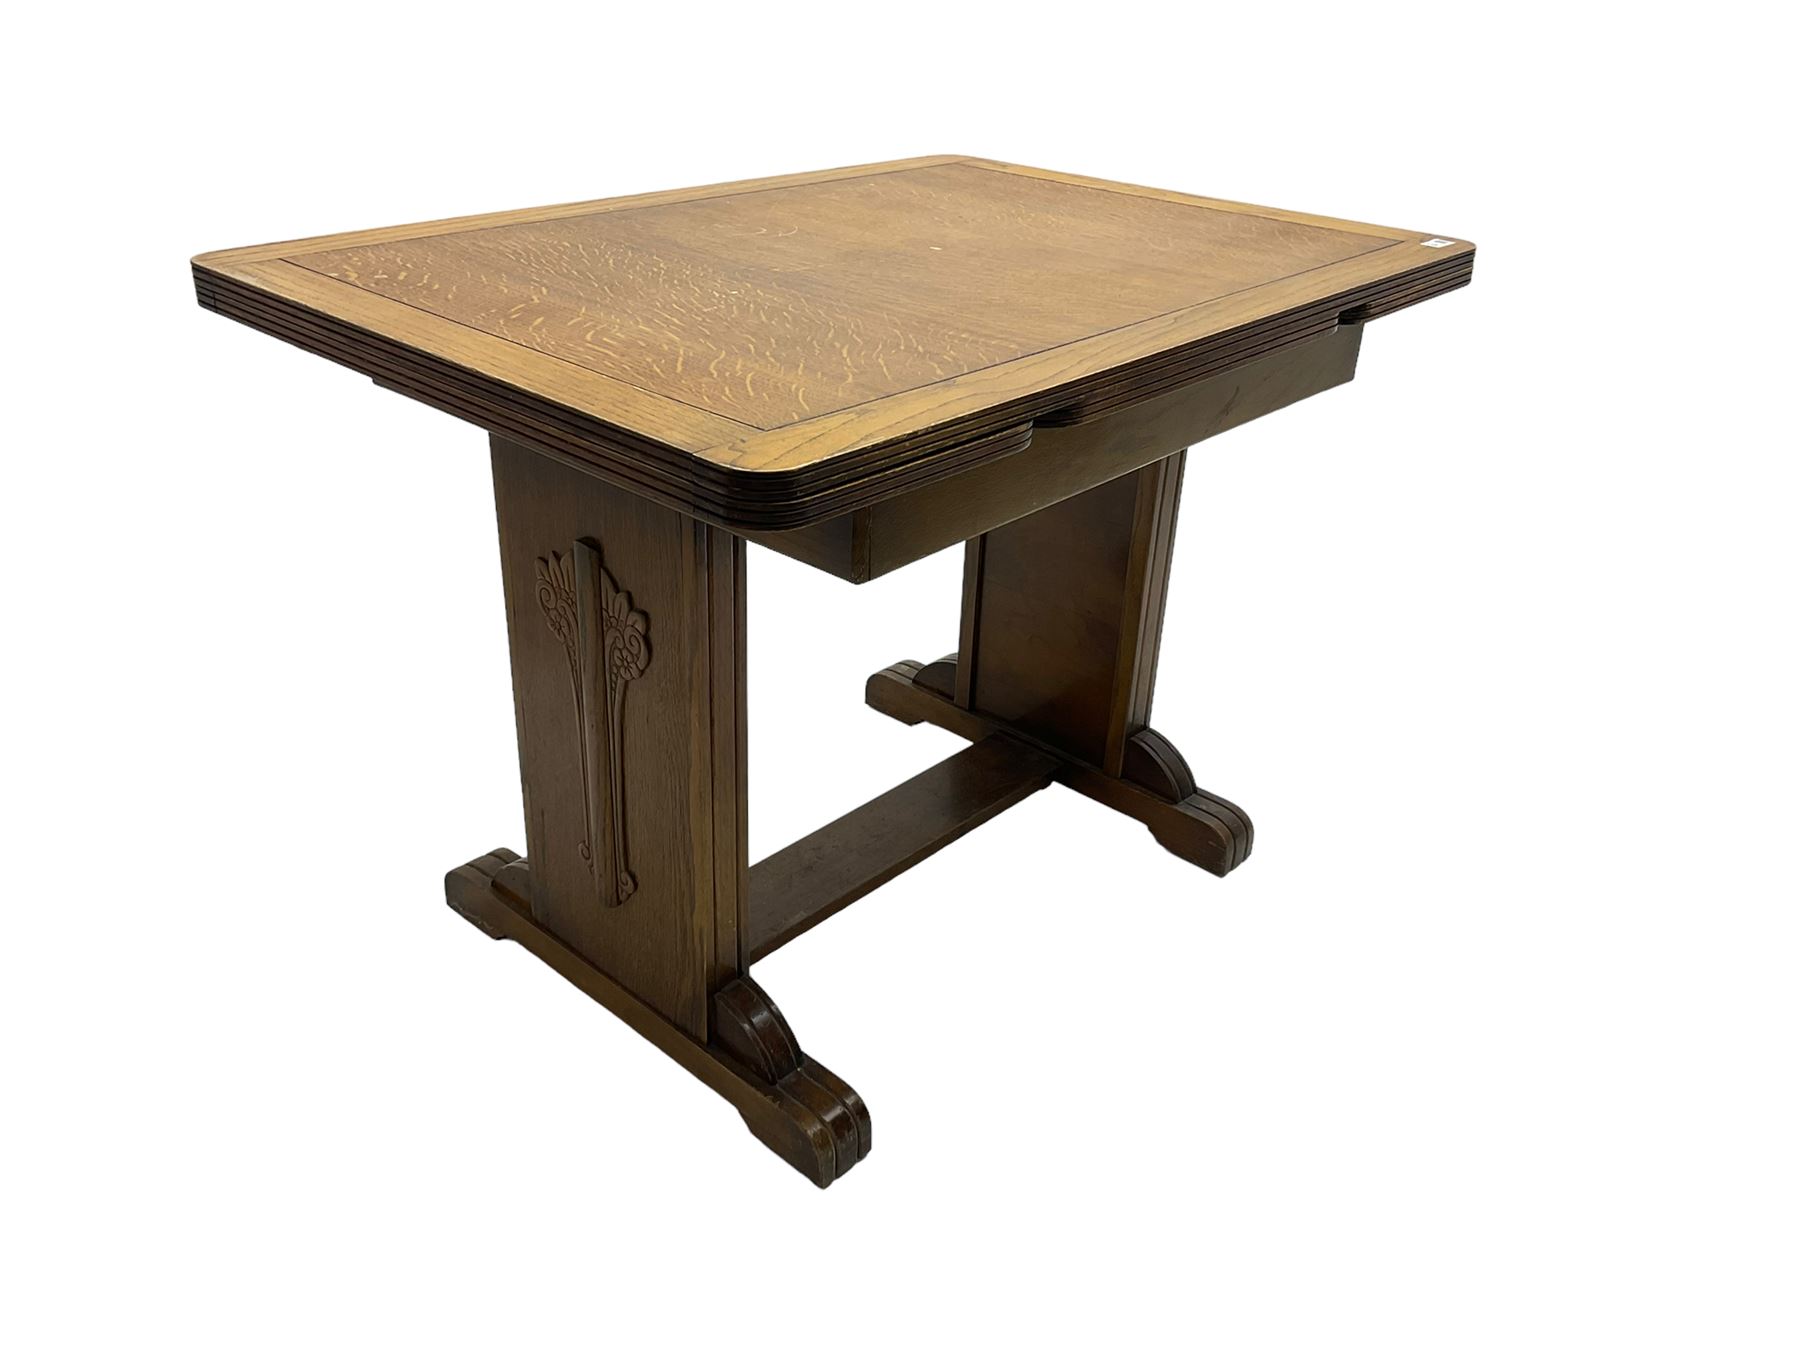 Oak rectangular extending dining table - Image 2 of 3